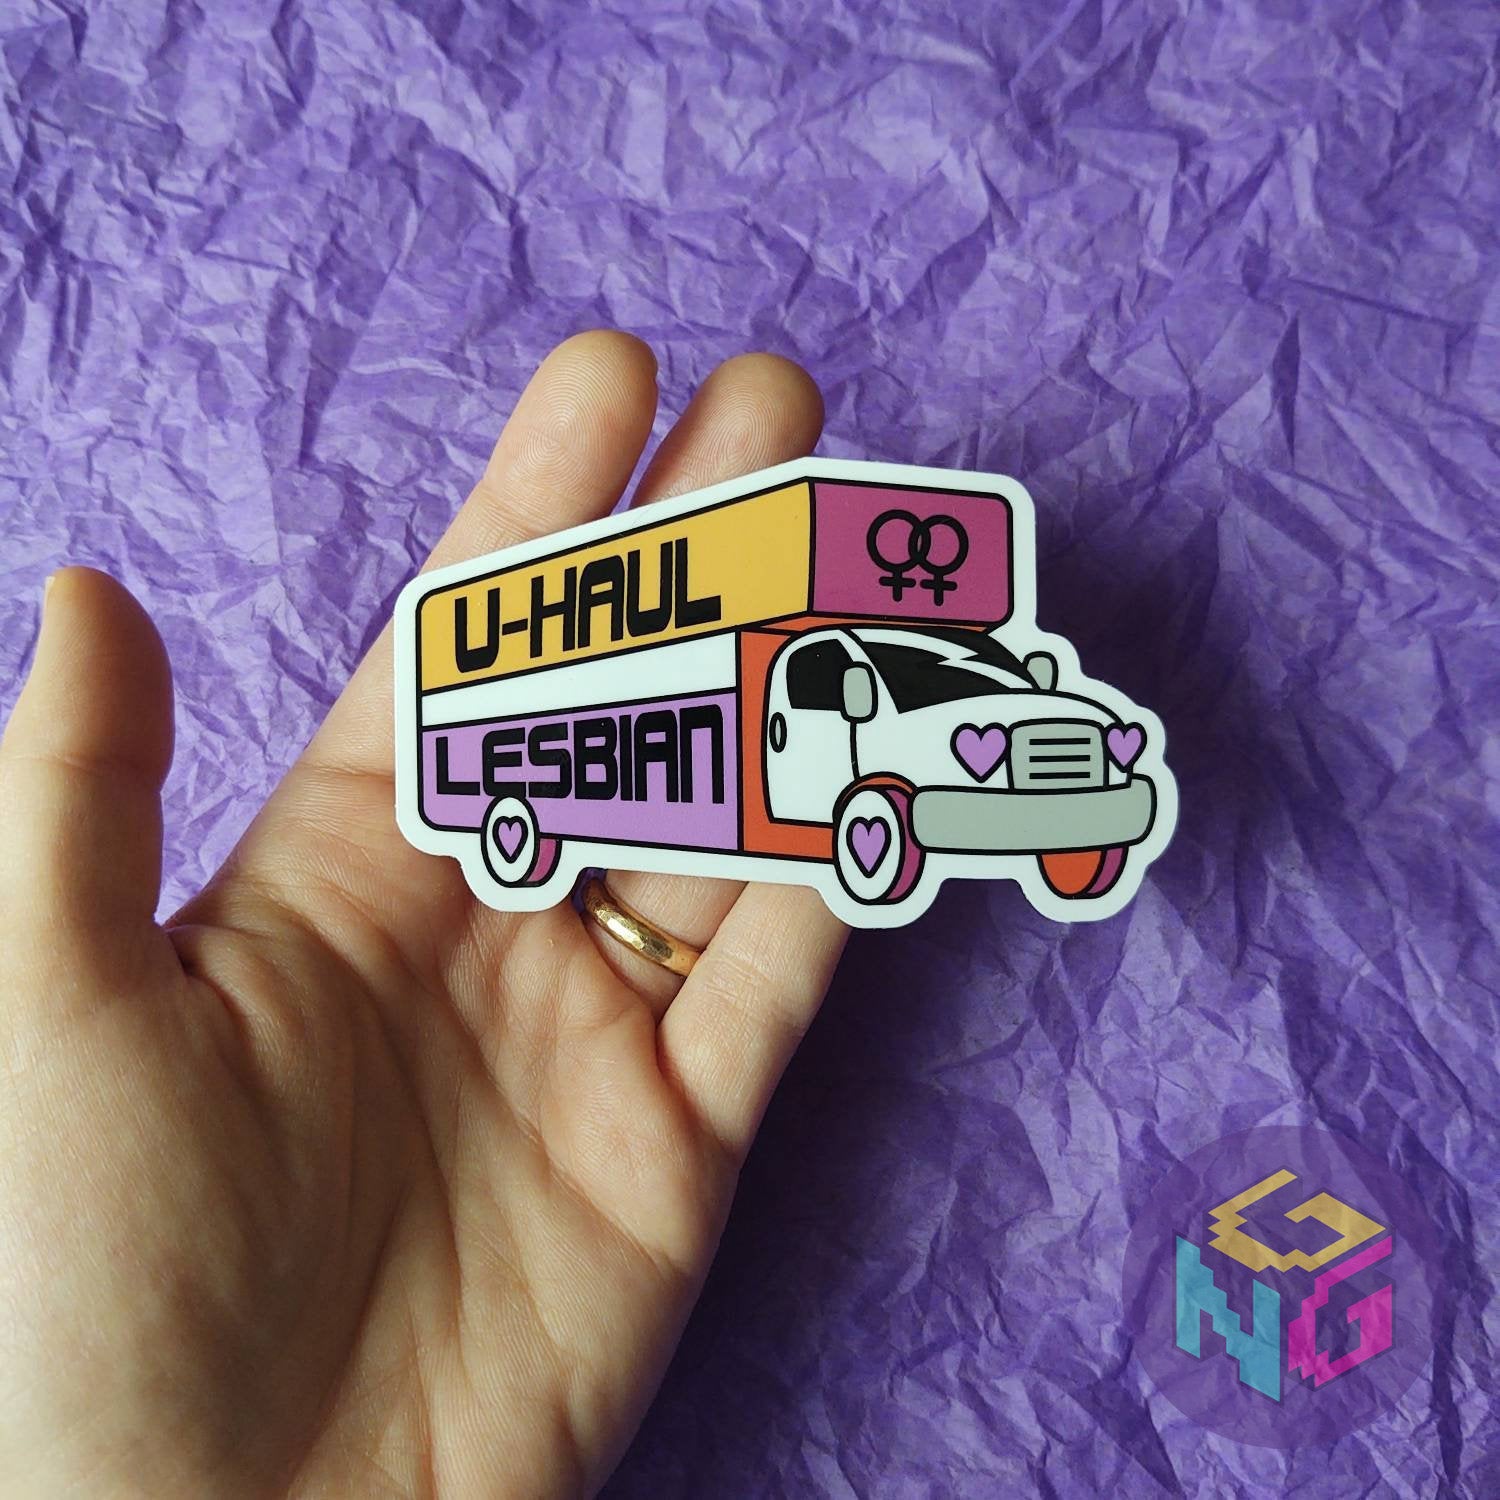 u-haul lesbian sticker held in a hand in front of purple background